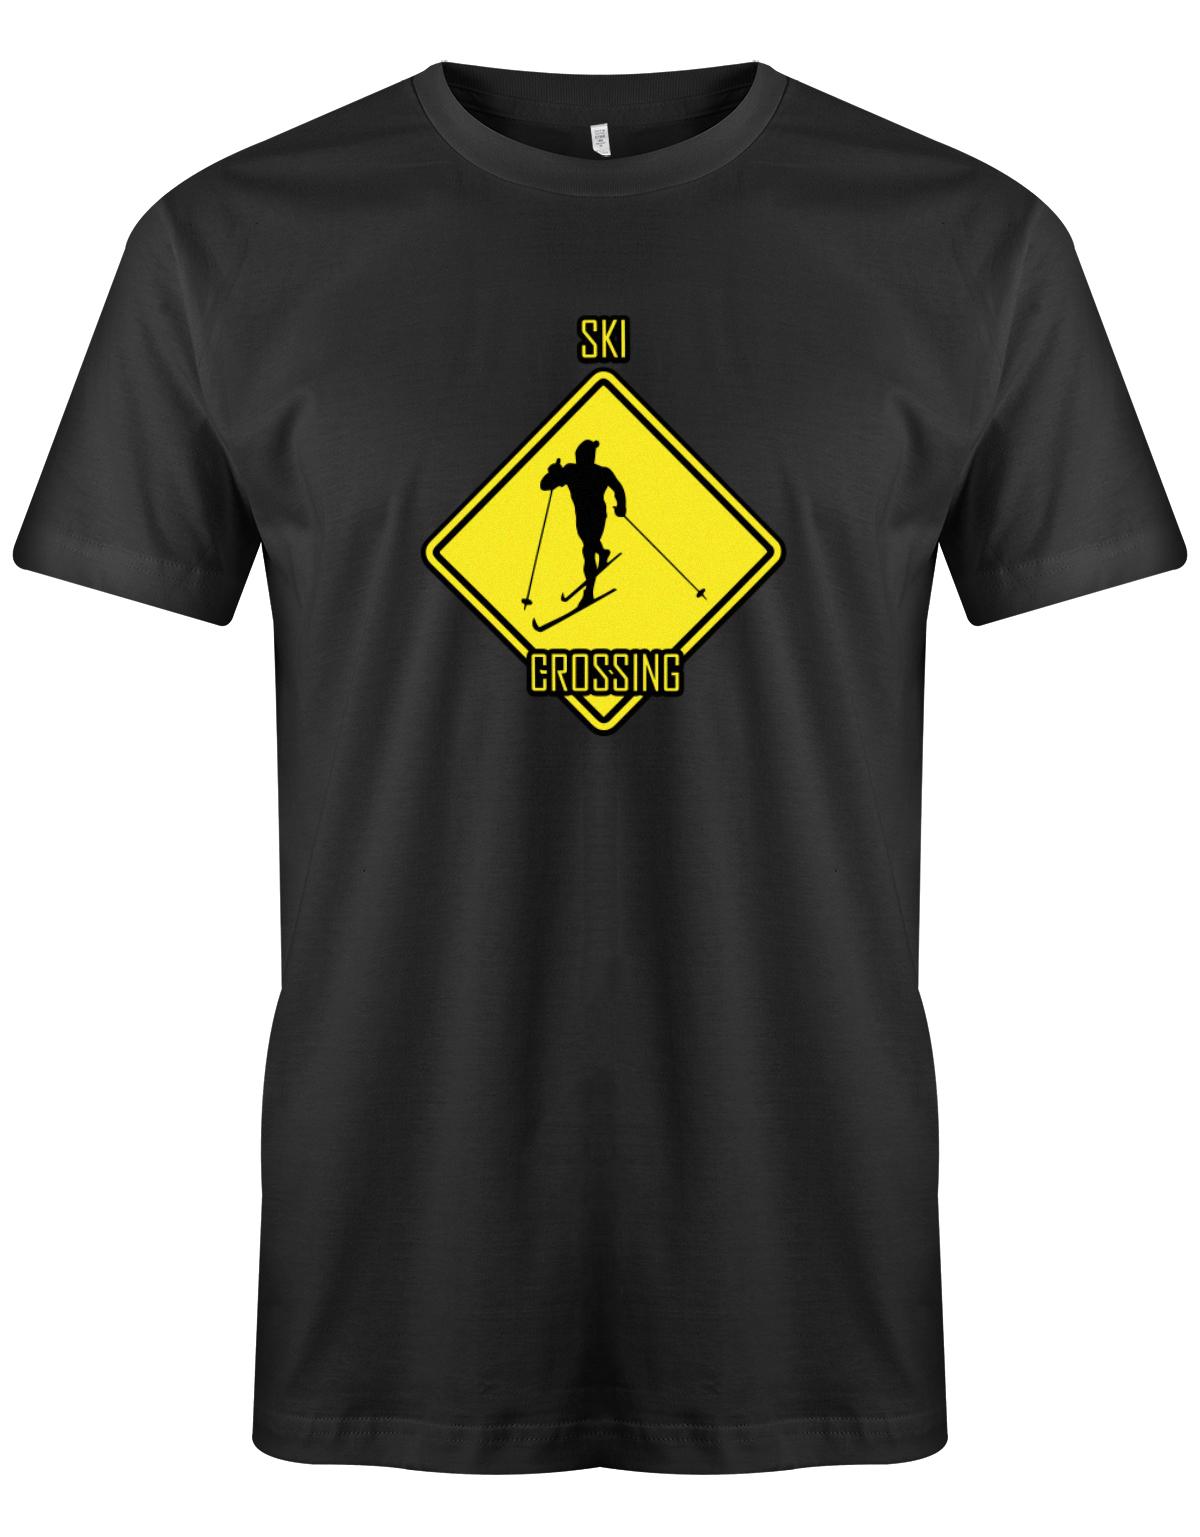 Ski-Crossing-Skier-shirt-herren-schwarz